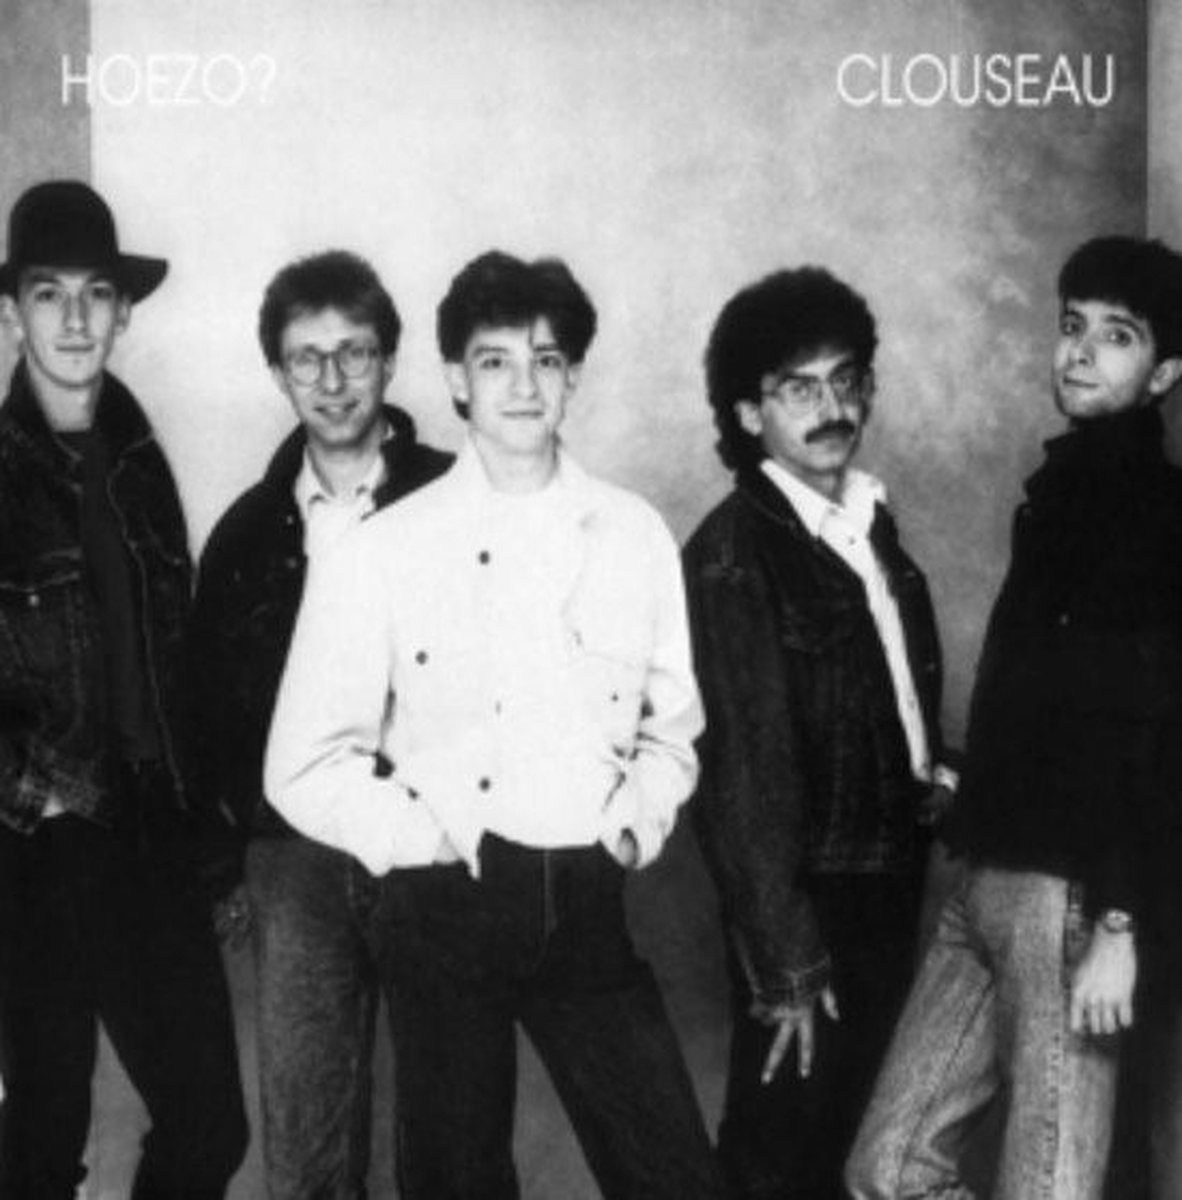 Clouseau - Hoezo ? (CD) - Clouseau